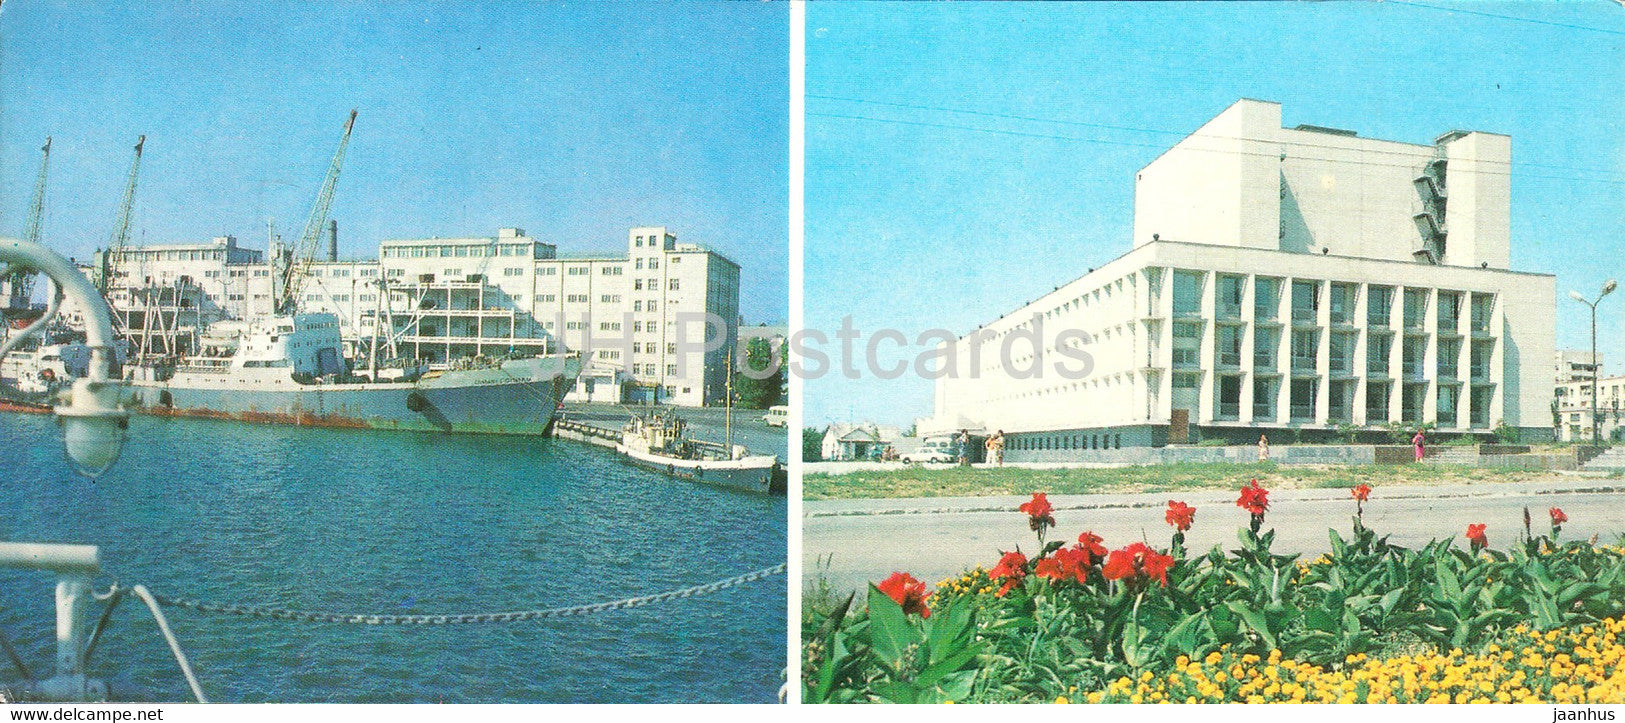 Sevastopol - fishing port - ship - fishermen's palace of culture - Crimea - 1981 - Ukraine USSR - unused - JH Postcards